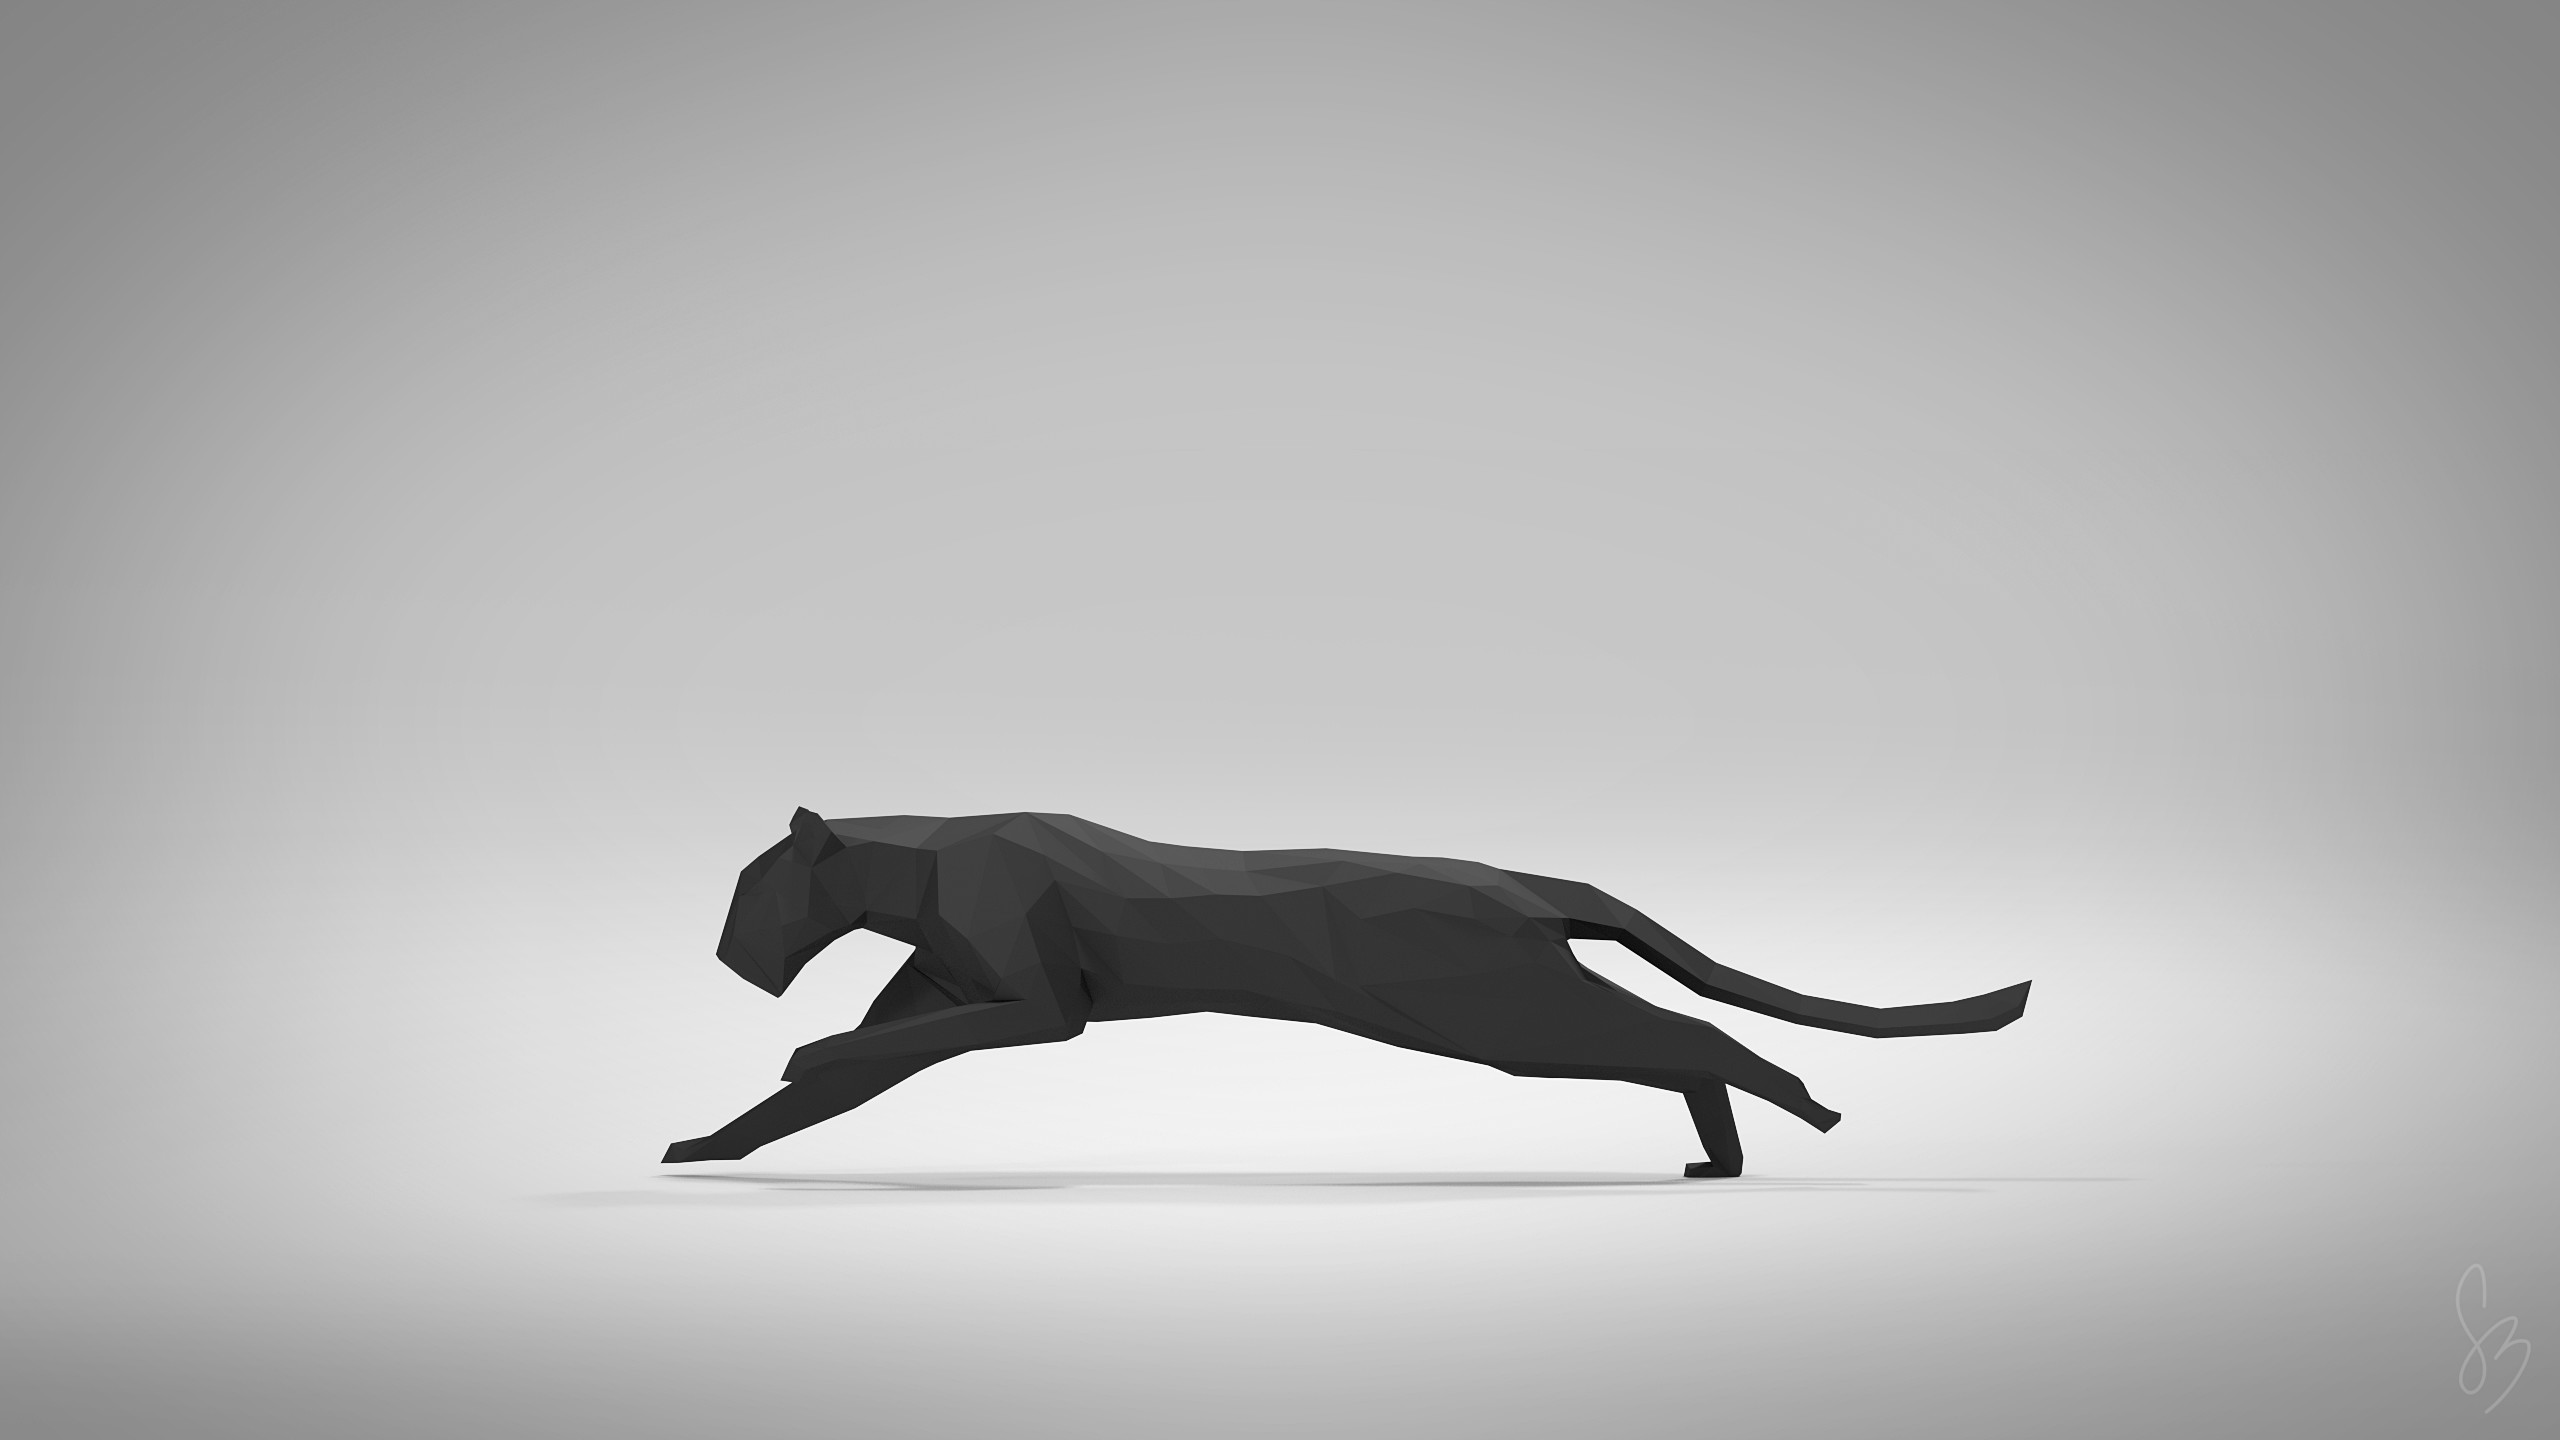 2560x1440 General  animals digital art pumas minimalism simple background  running black vector artwork low poly gray